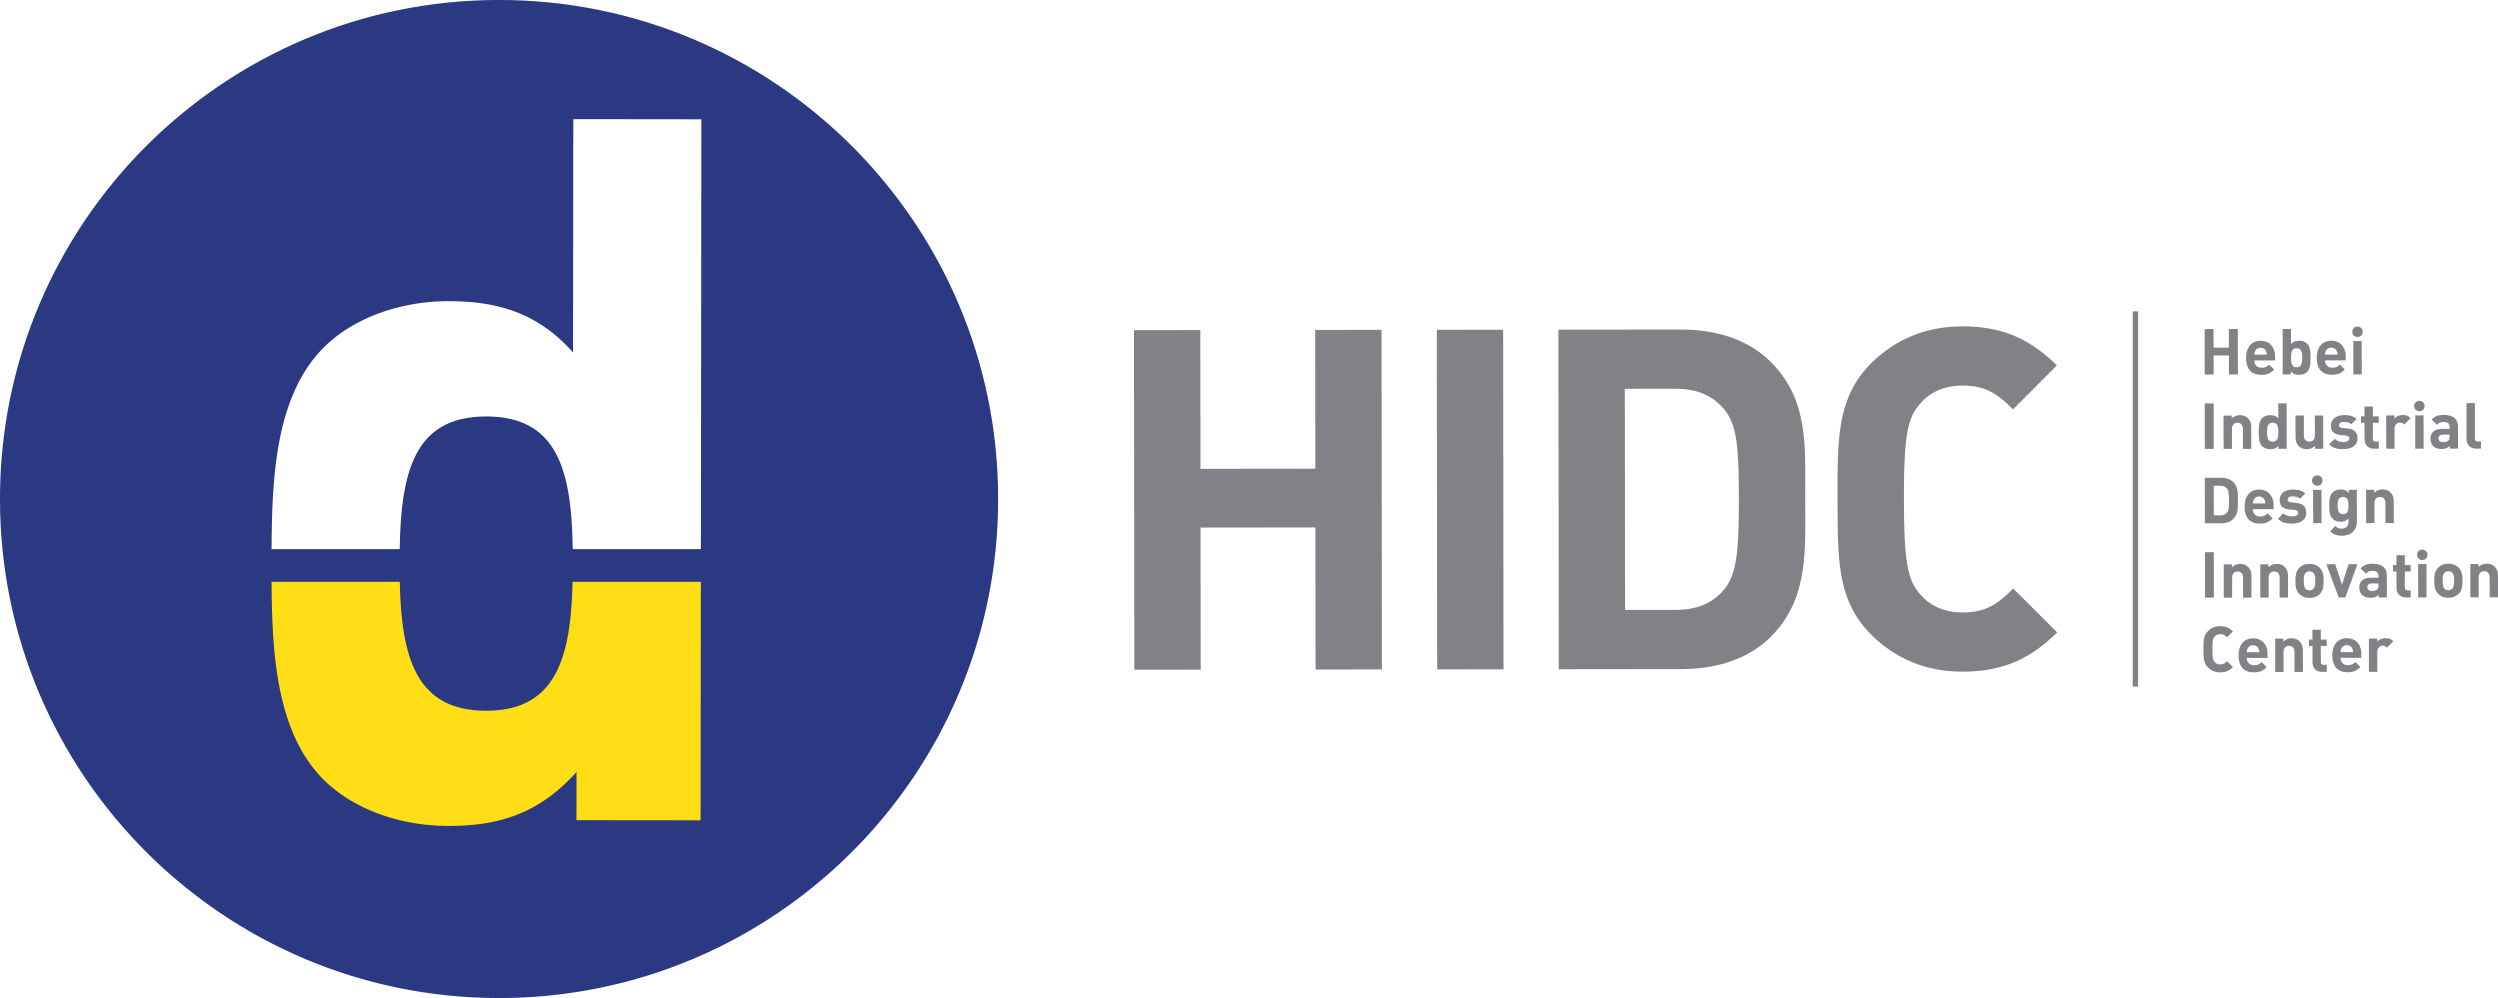 Hebei Industrial Design Innovation Center (HIDC) Logo